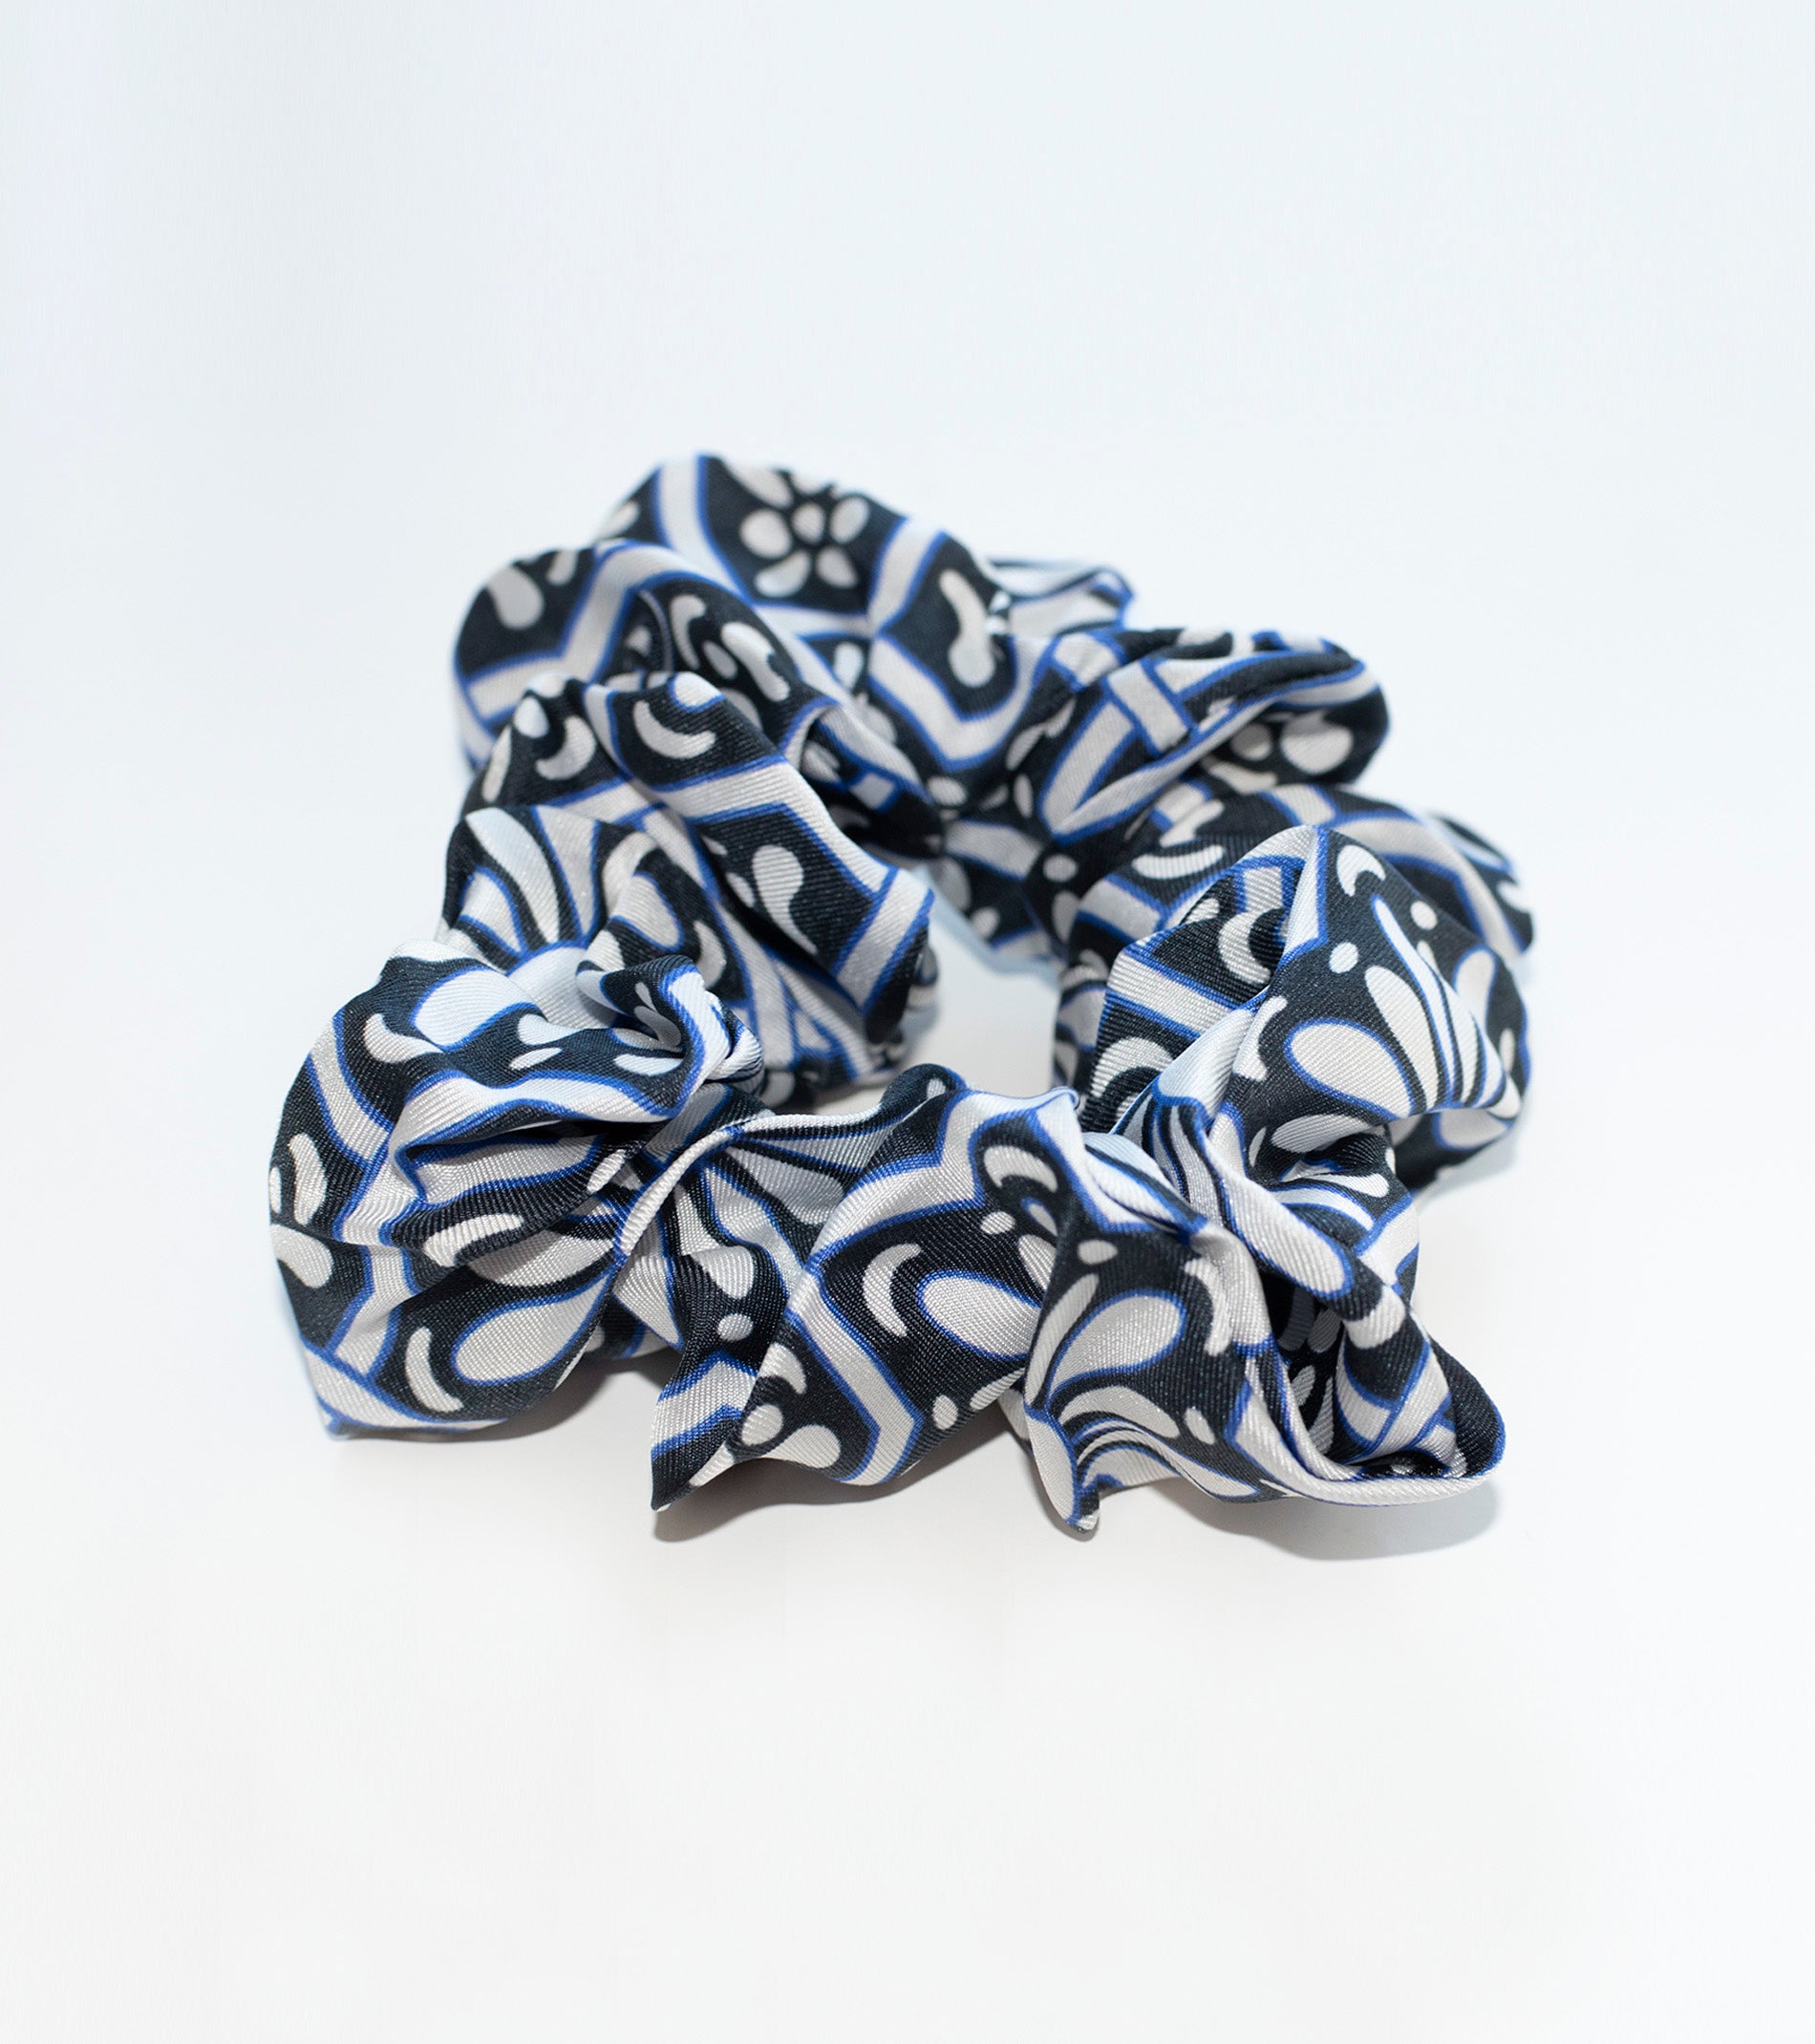 Hair tie designed by Swiss artist